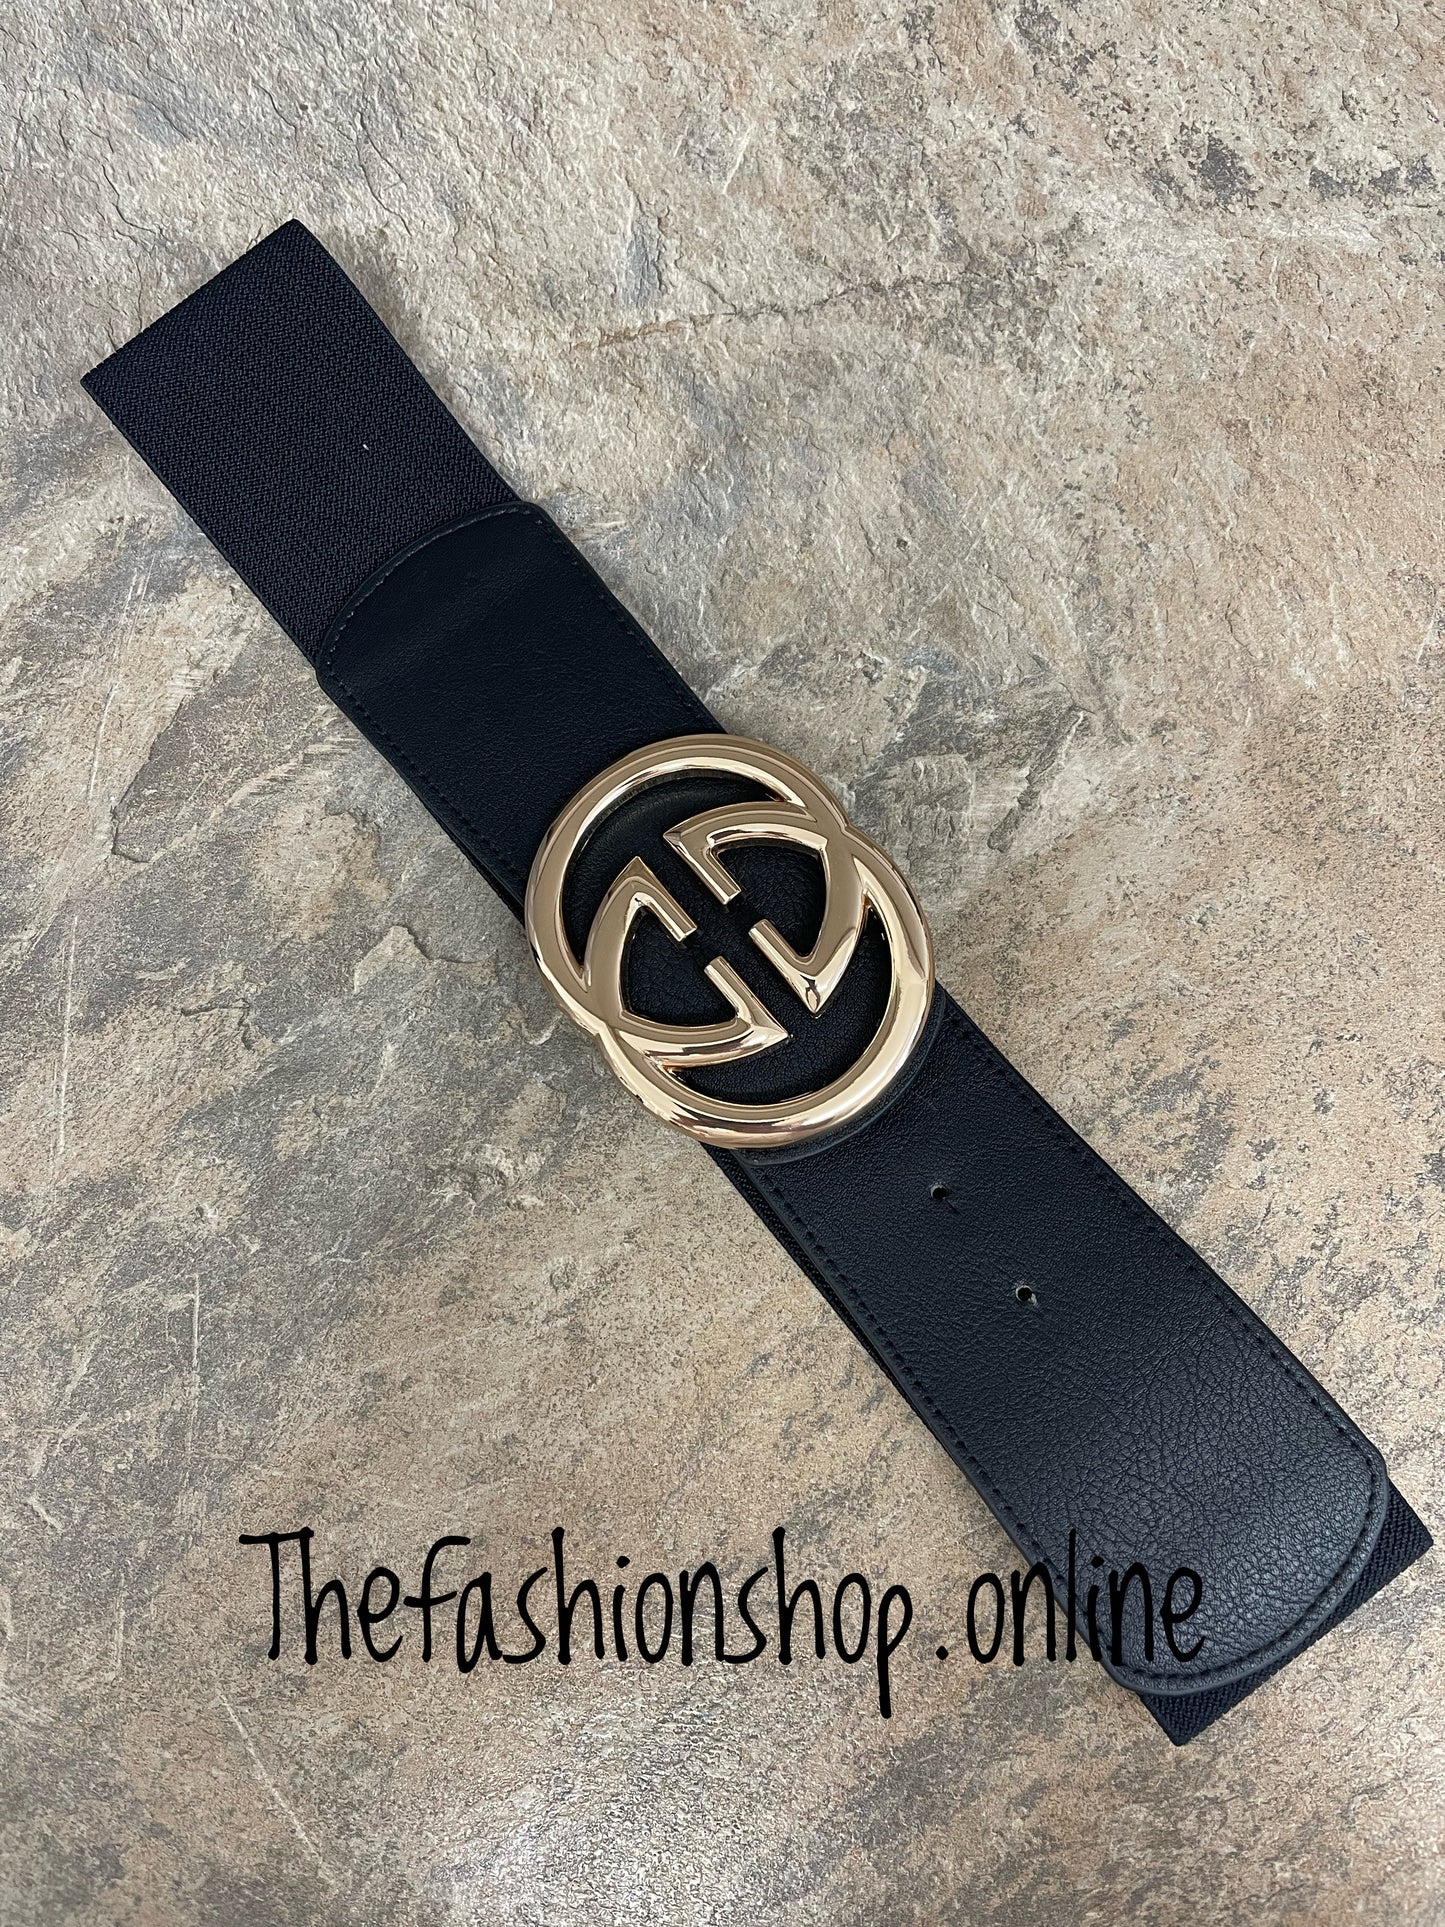 Black elasticated belt with gold logo buckle